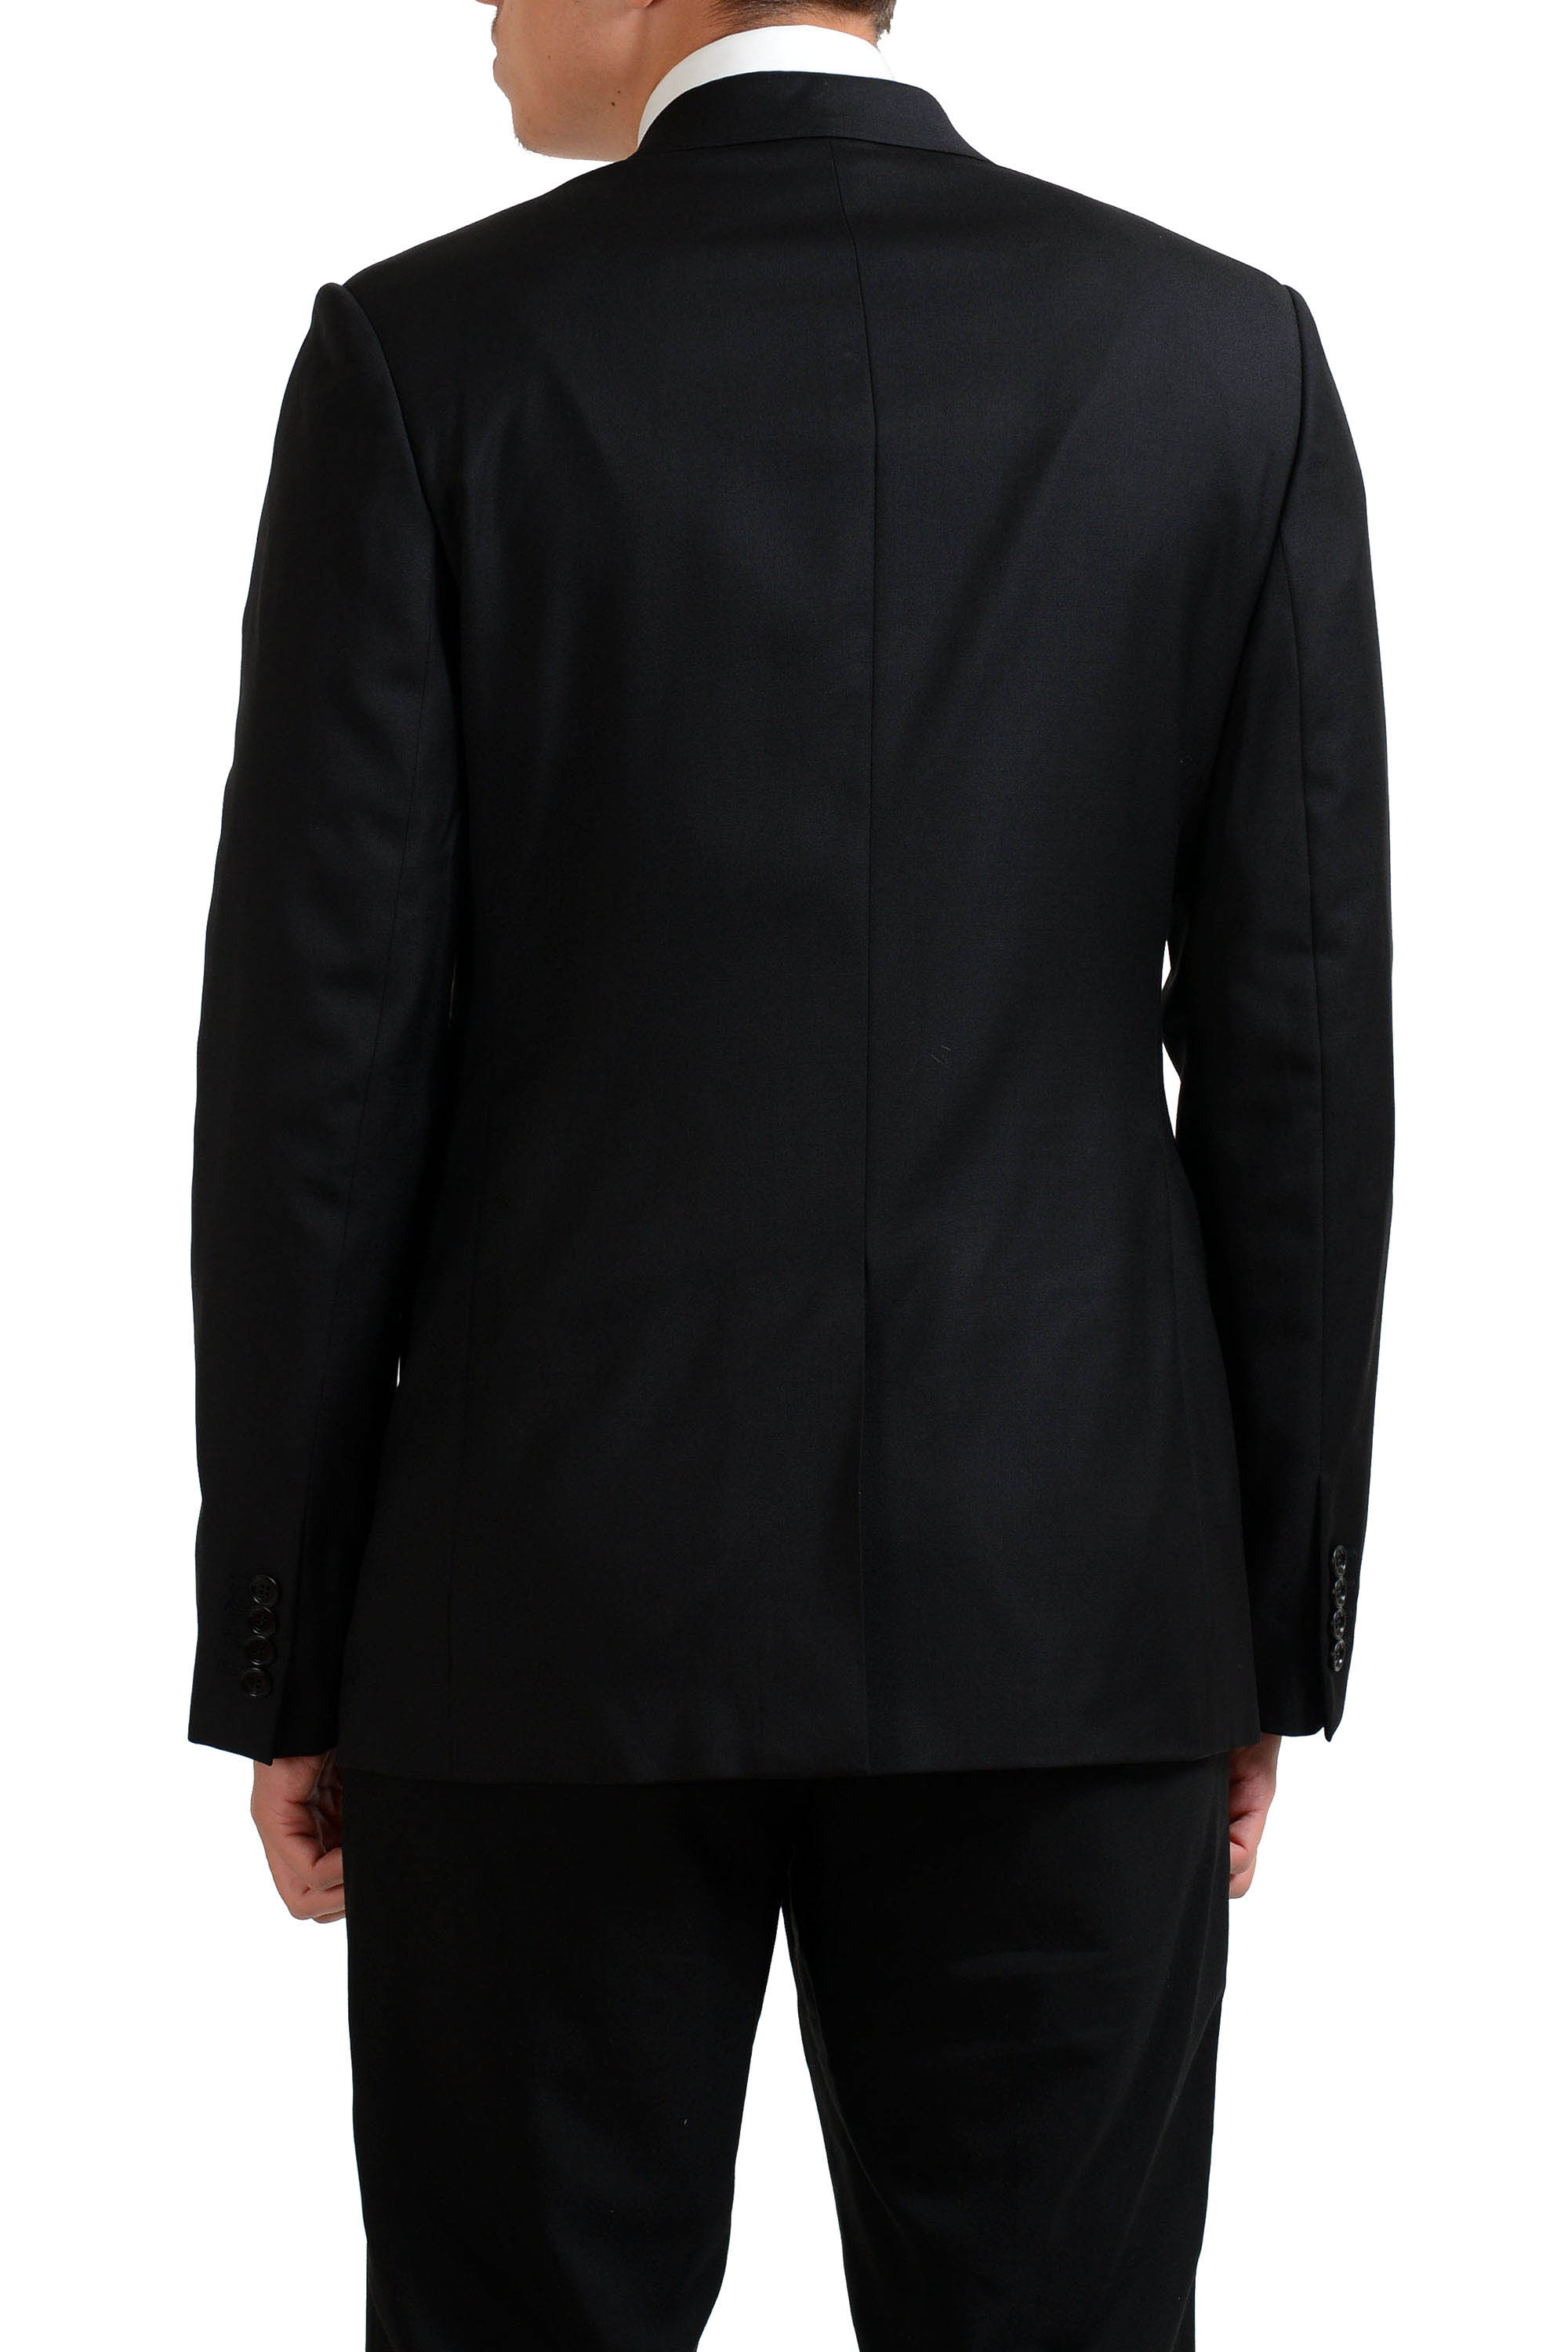 Christian Dior Men's 100% Wool Two Button Blazer Sport Coat